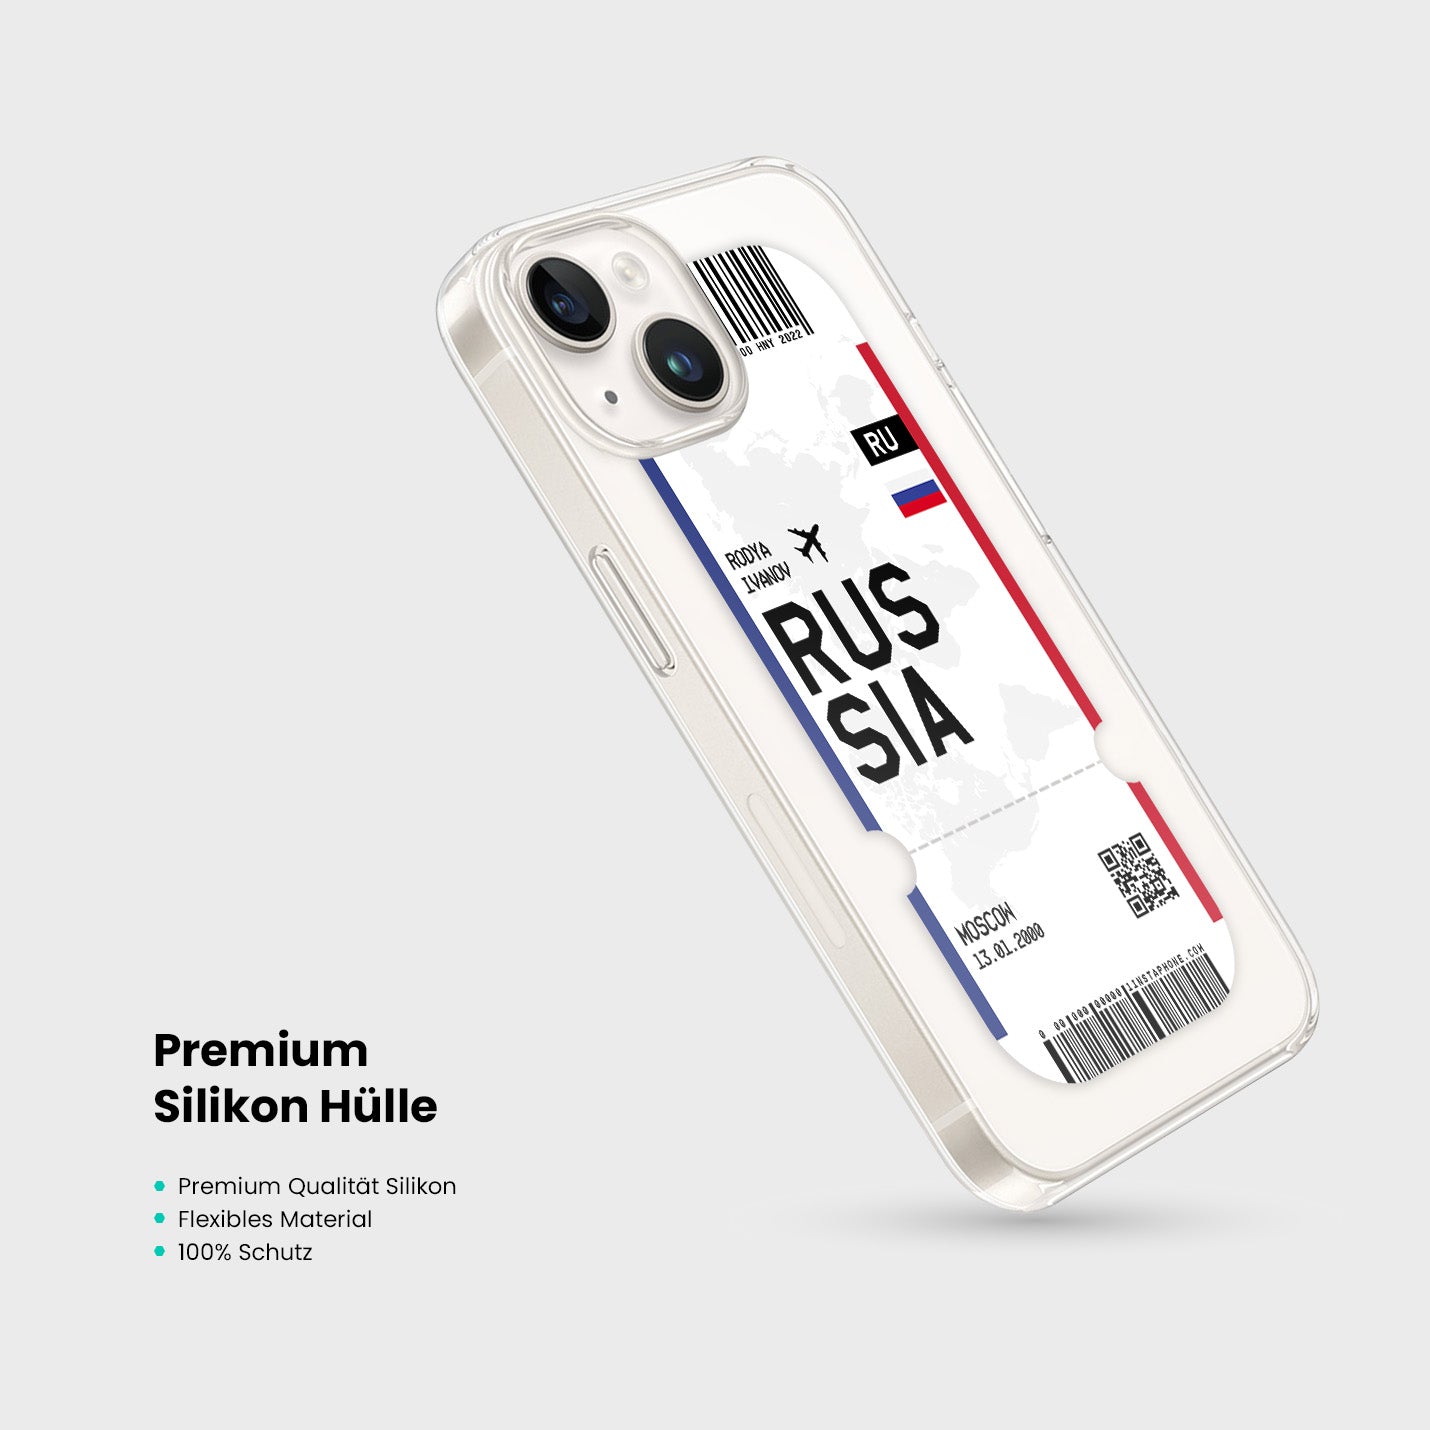 Handyhülle im Ticket Design - Russland - 1instaphone